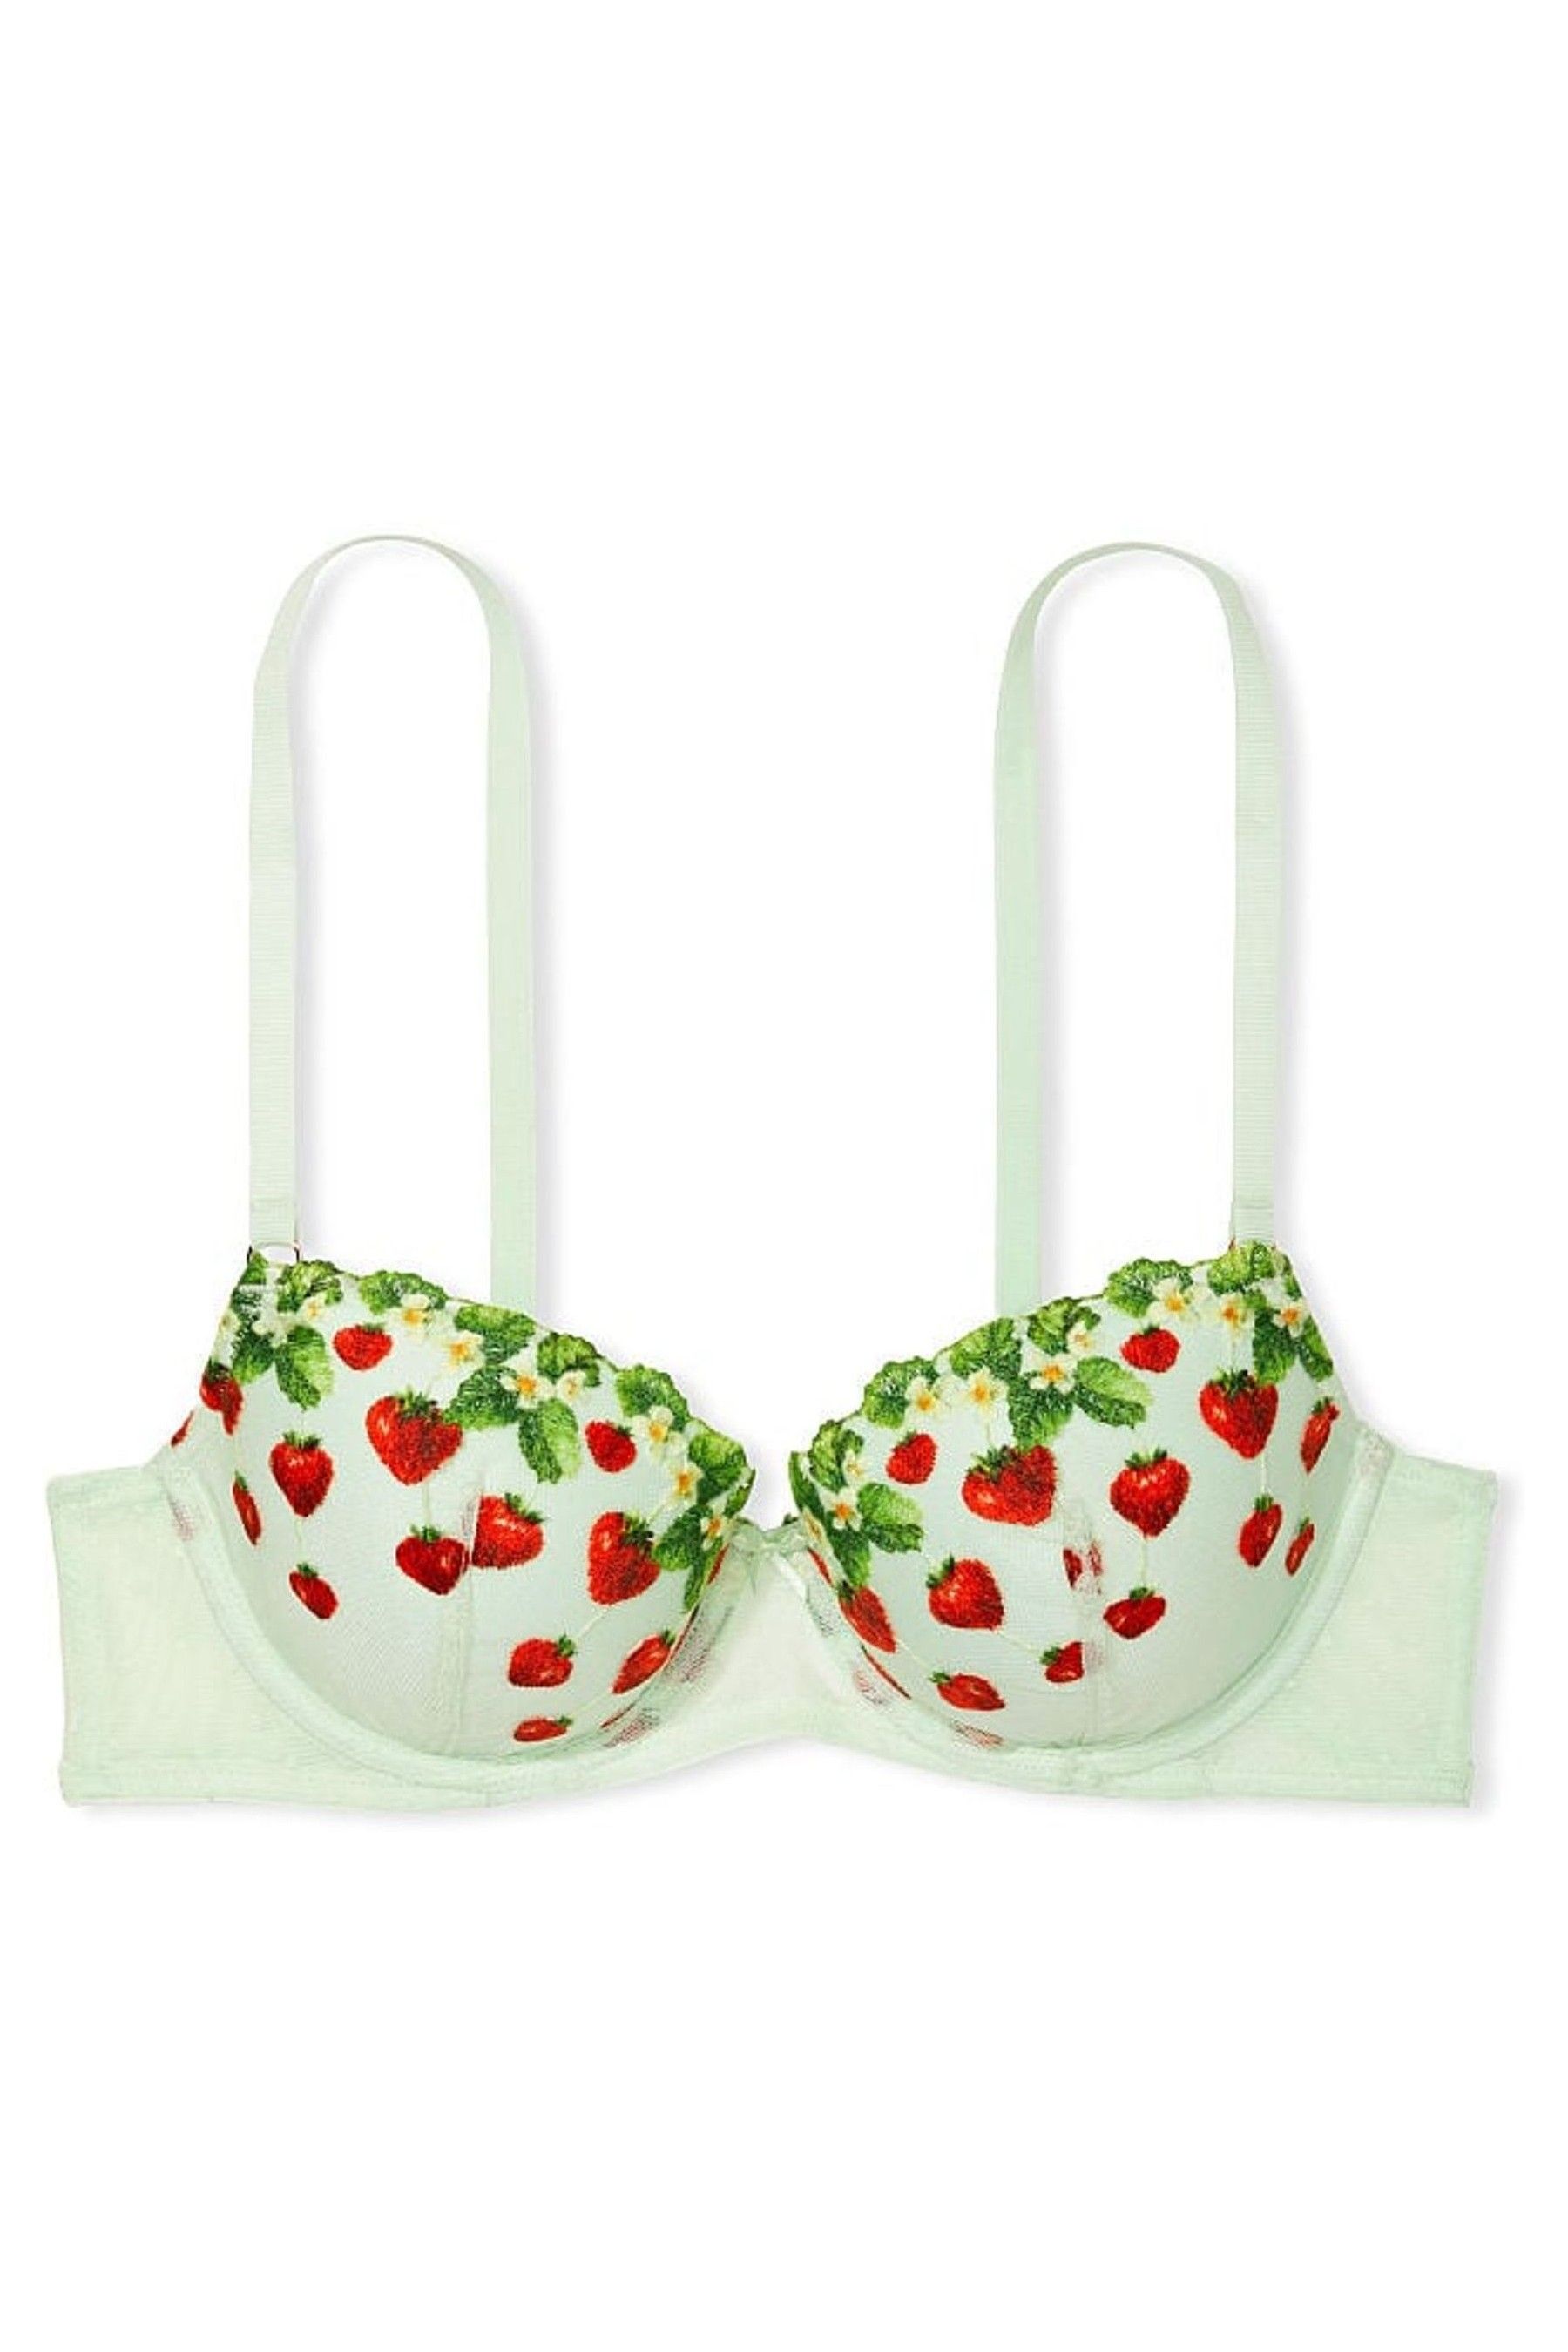 Buy Victoria's Secret Strawberry Embroidered Bra from the Victoria's ...